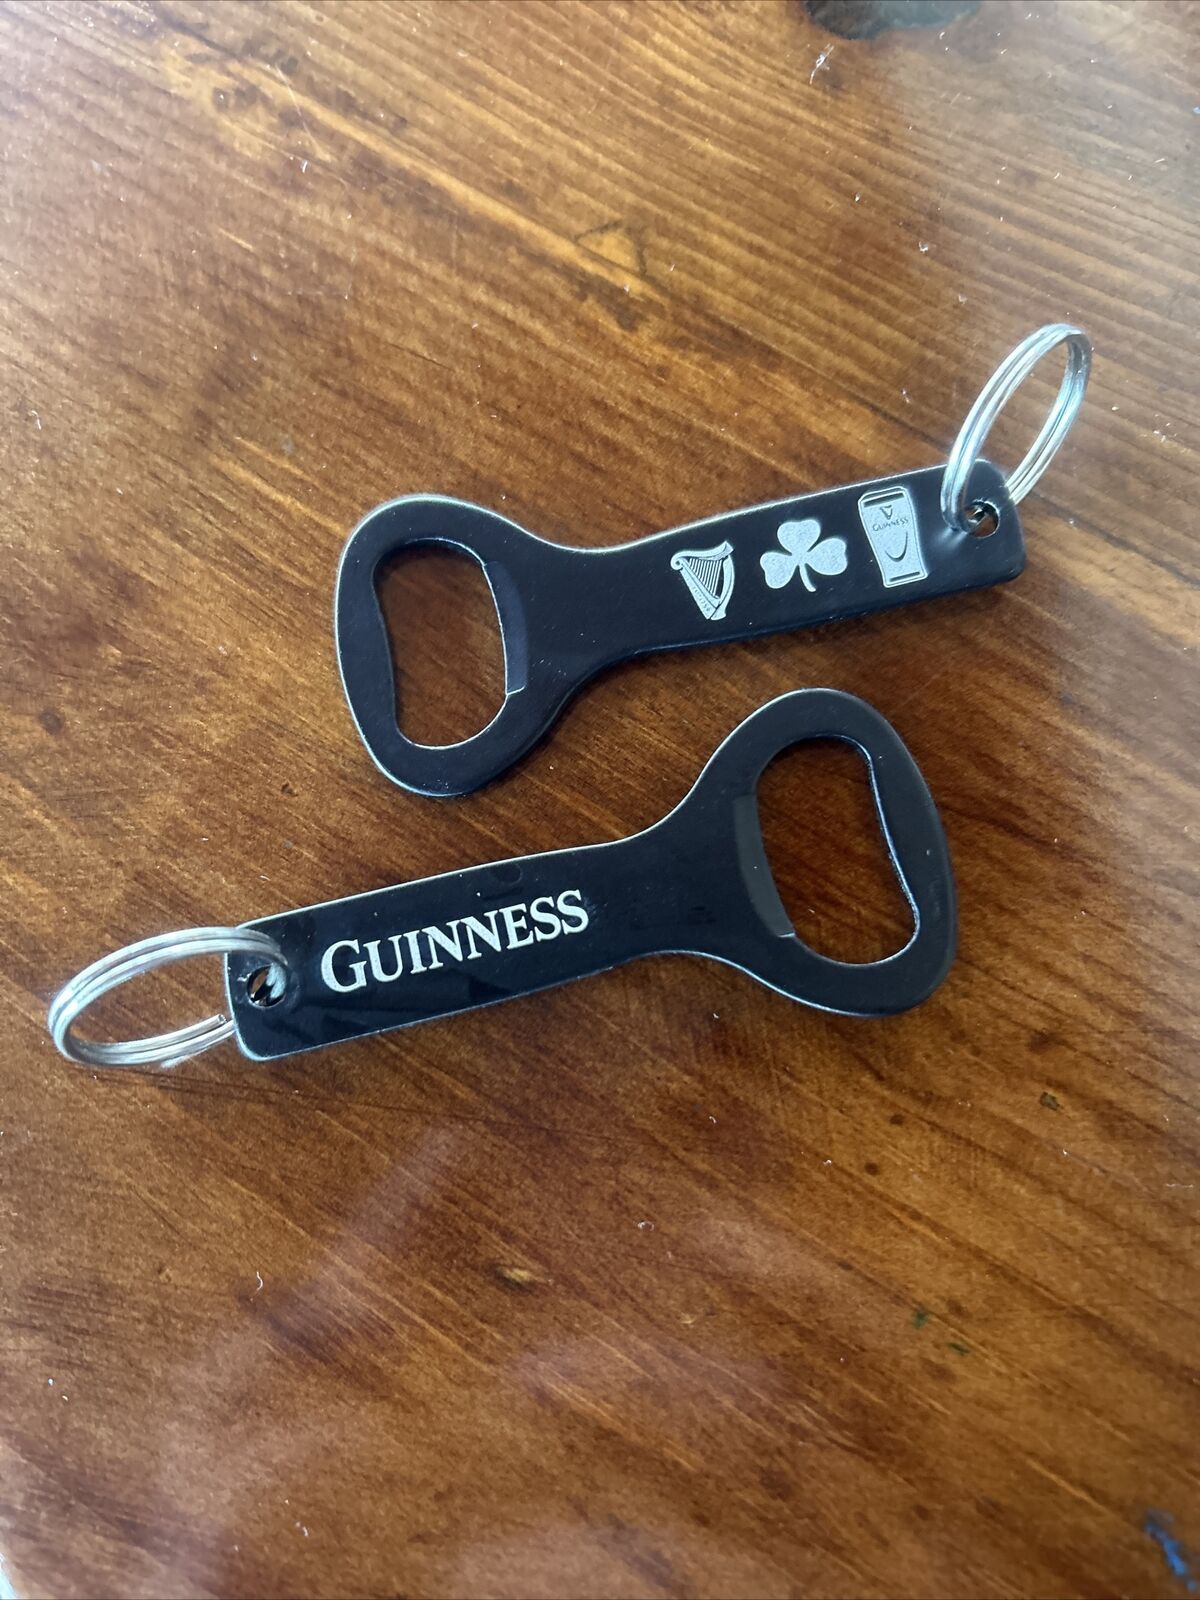 2 New Irish Guinness Metal Beer Bottle Openers/ Keychain Black w/White Imprint